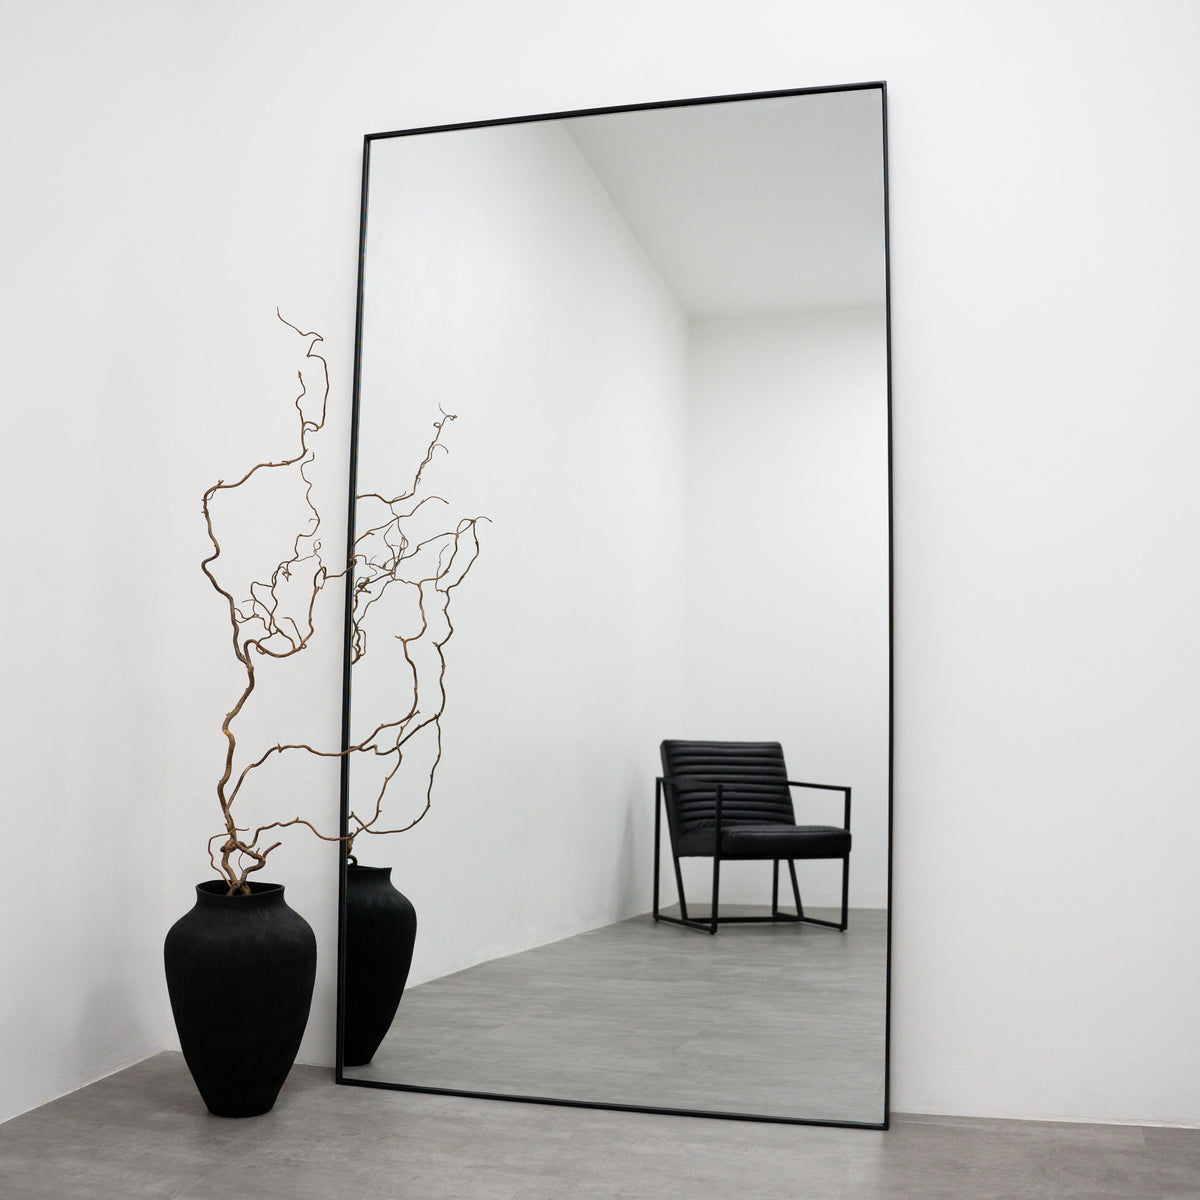 Theo - Full Length Black Extra Large Metal Mirror 180cm x 100cm